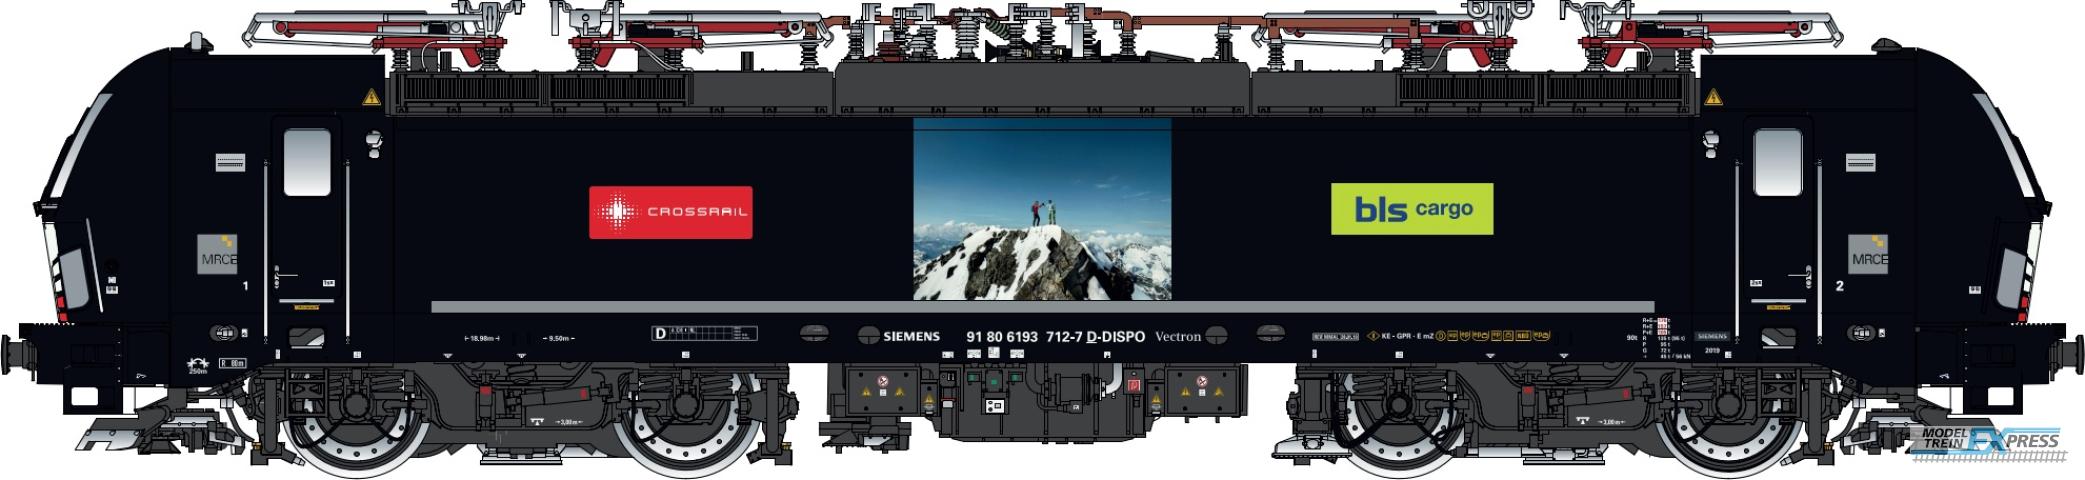 LS Models 17617 BLS Cargo/Crossrail/MRCE Vectron MS, 91 80 6193 712-7 D-DISPO, 4 pantographs  /  Ep. VI  /  ---  /  HO  /  AC  /  1 P.